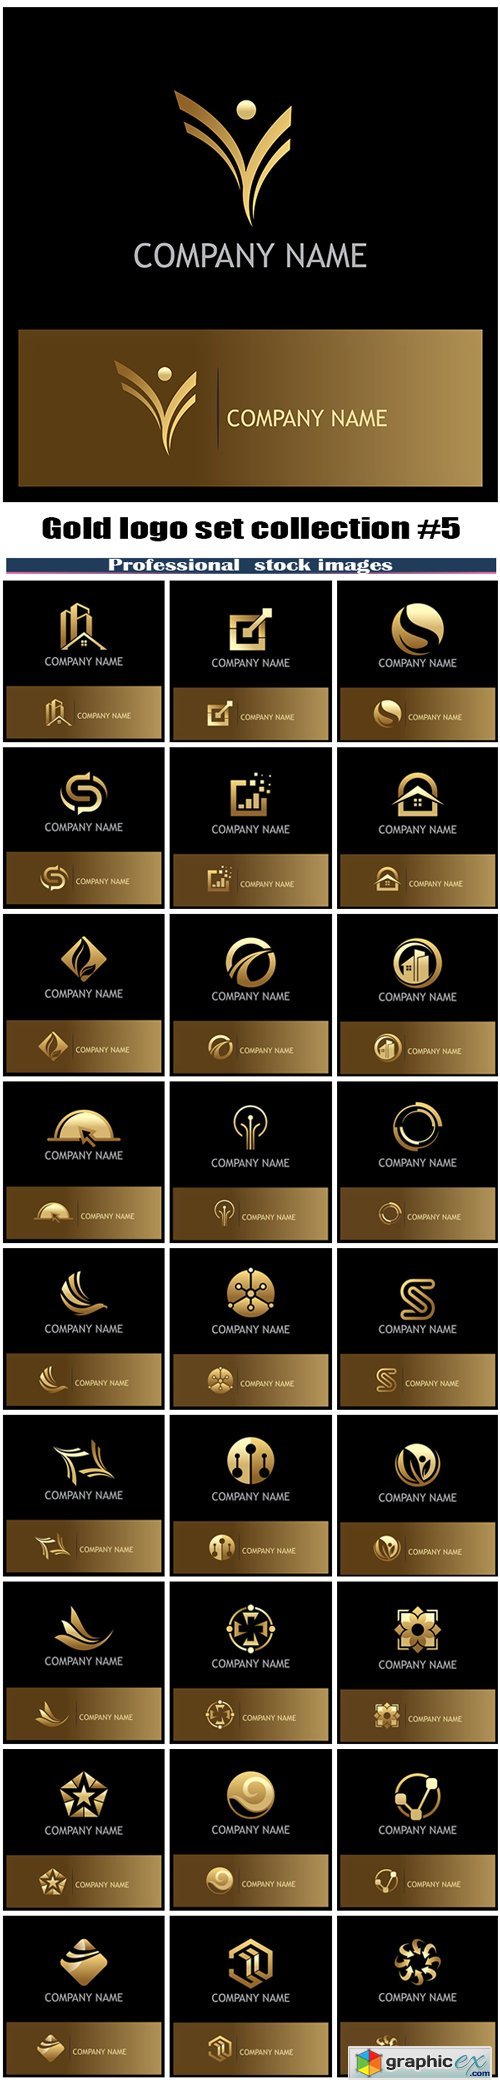 Gold logo set collection #5